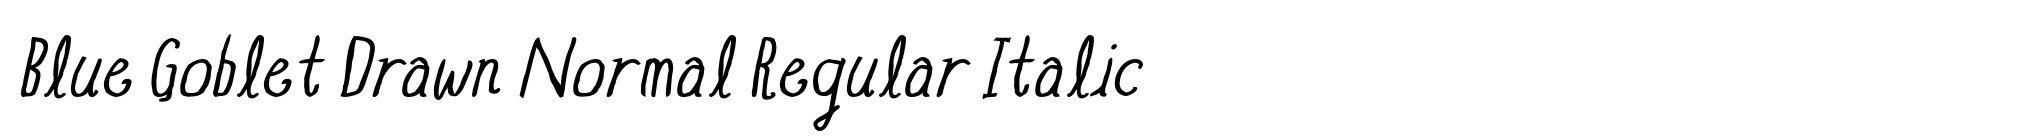 Blue Goblet Drawn Normal Regular Italic image